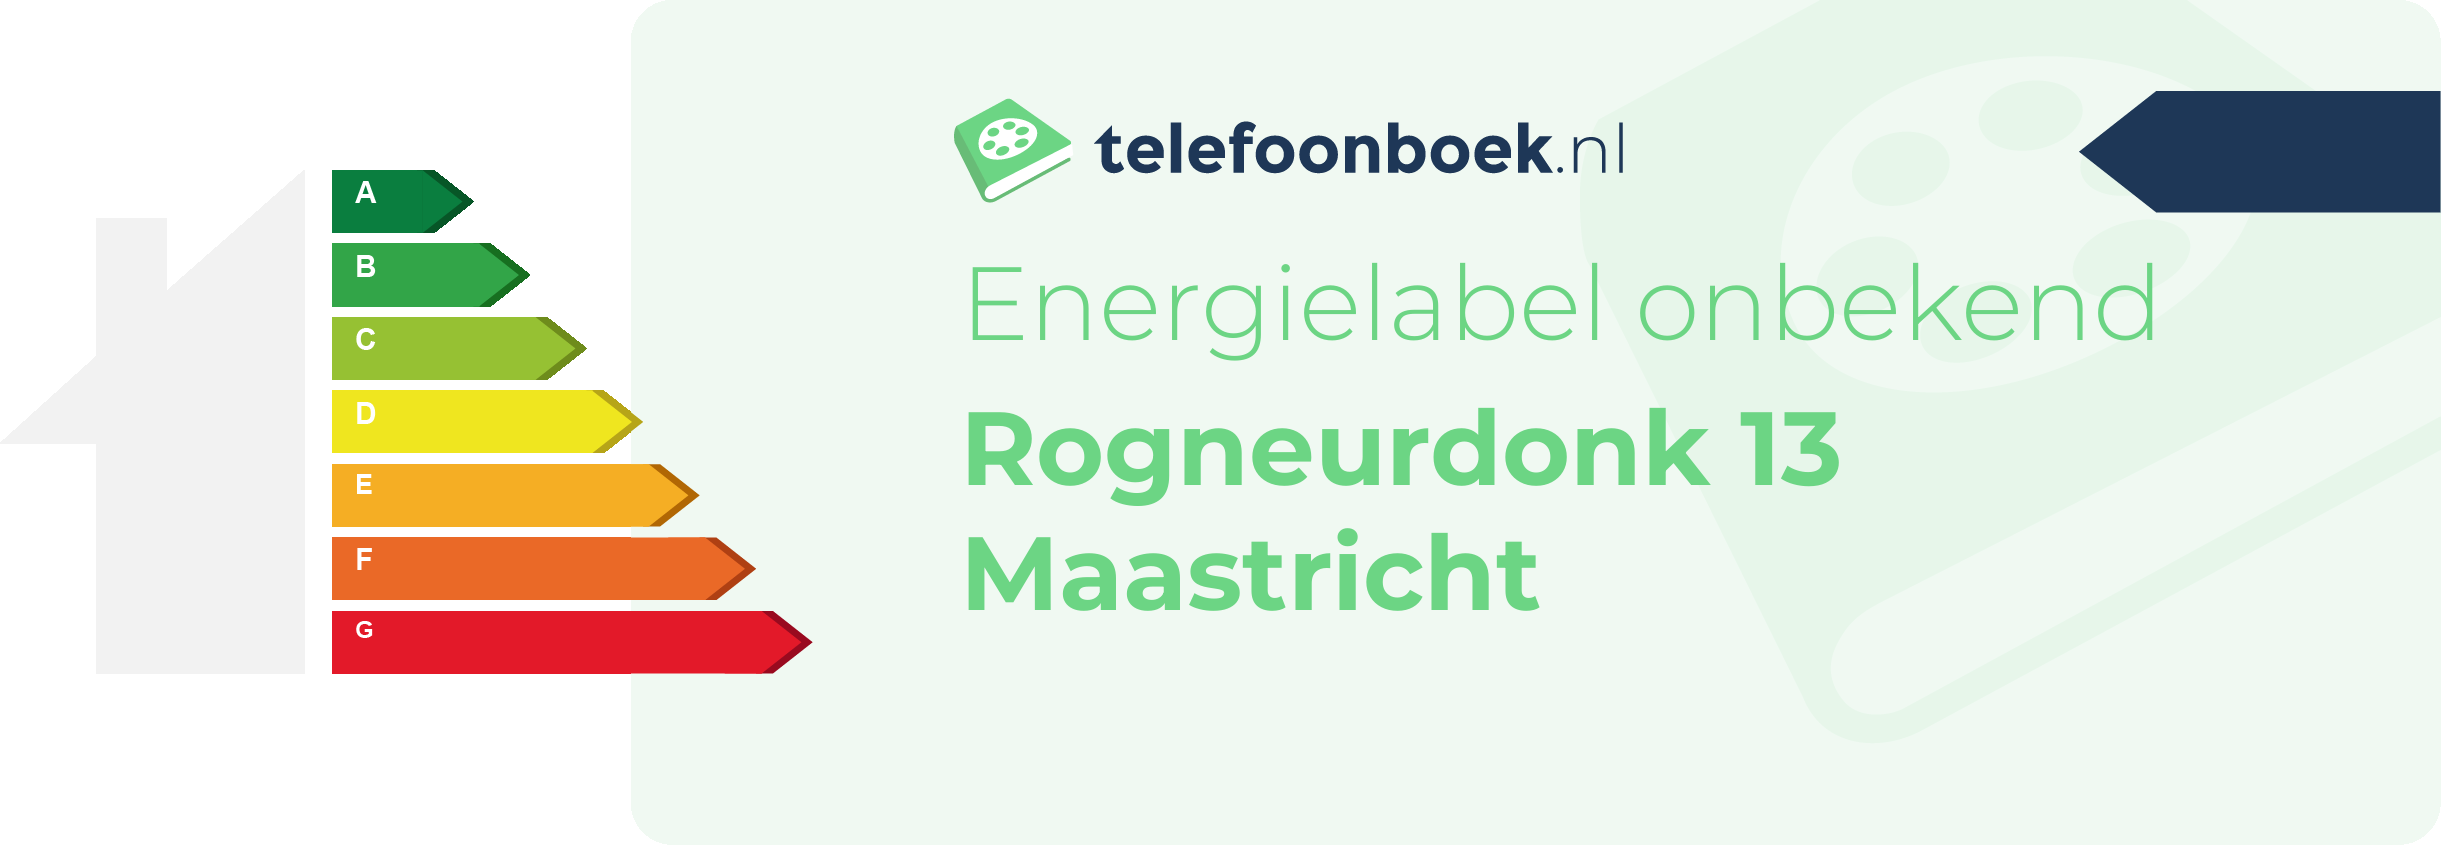 Energielabel Rogneurdonk 13 Maastricht